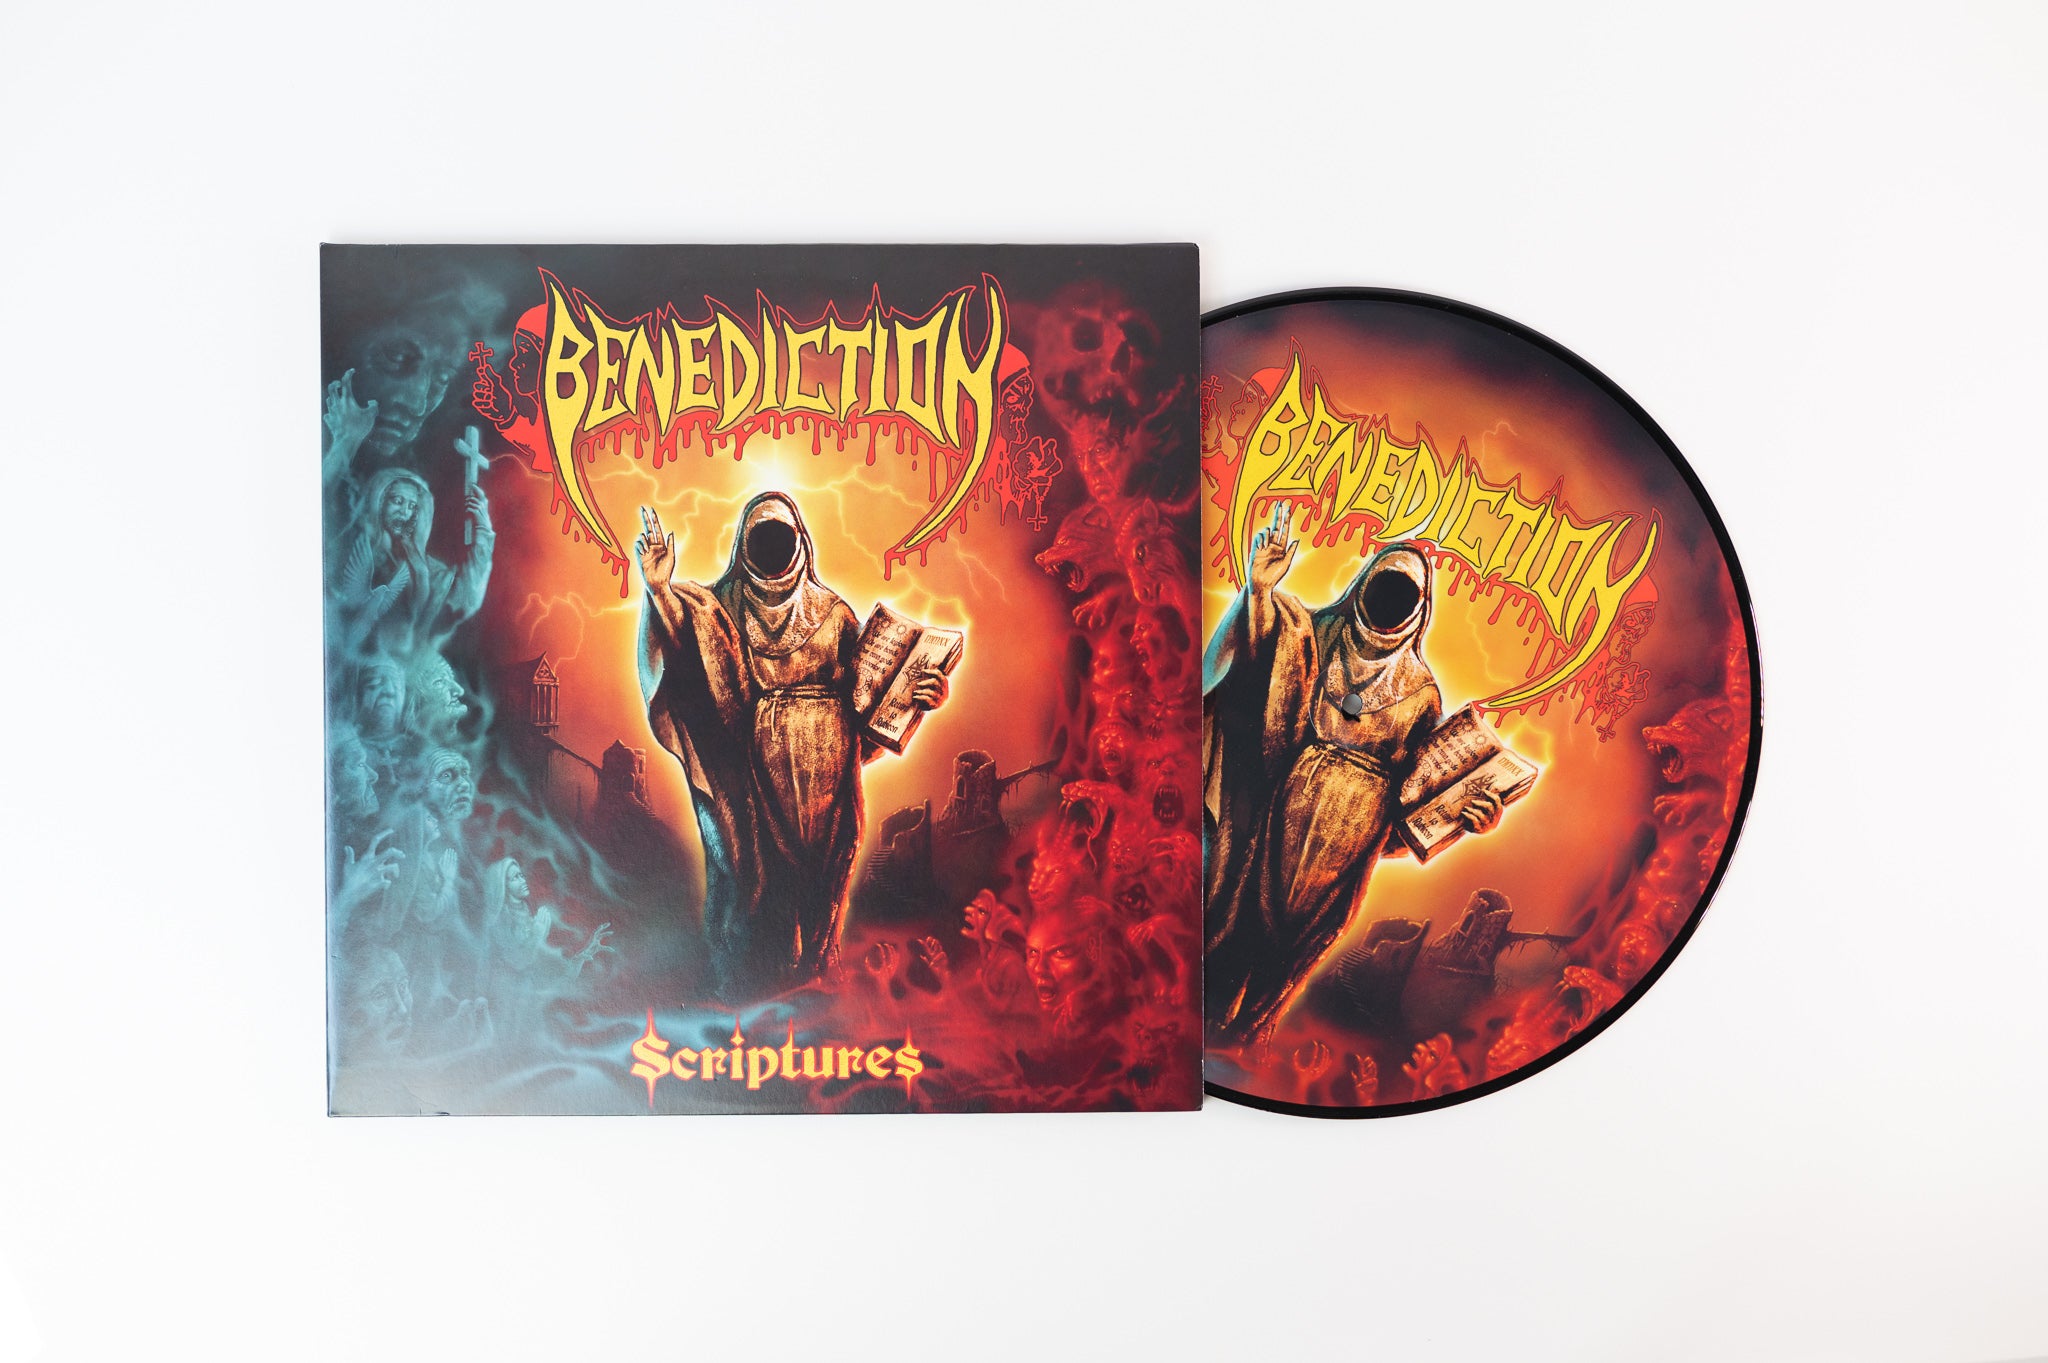 Benediction - Scriptures on Nuclear Blast 2 Picture Discs Reissue